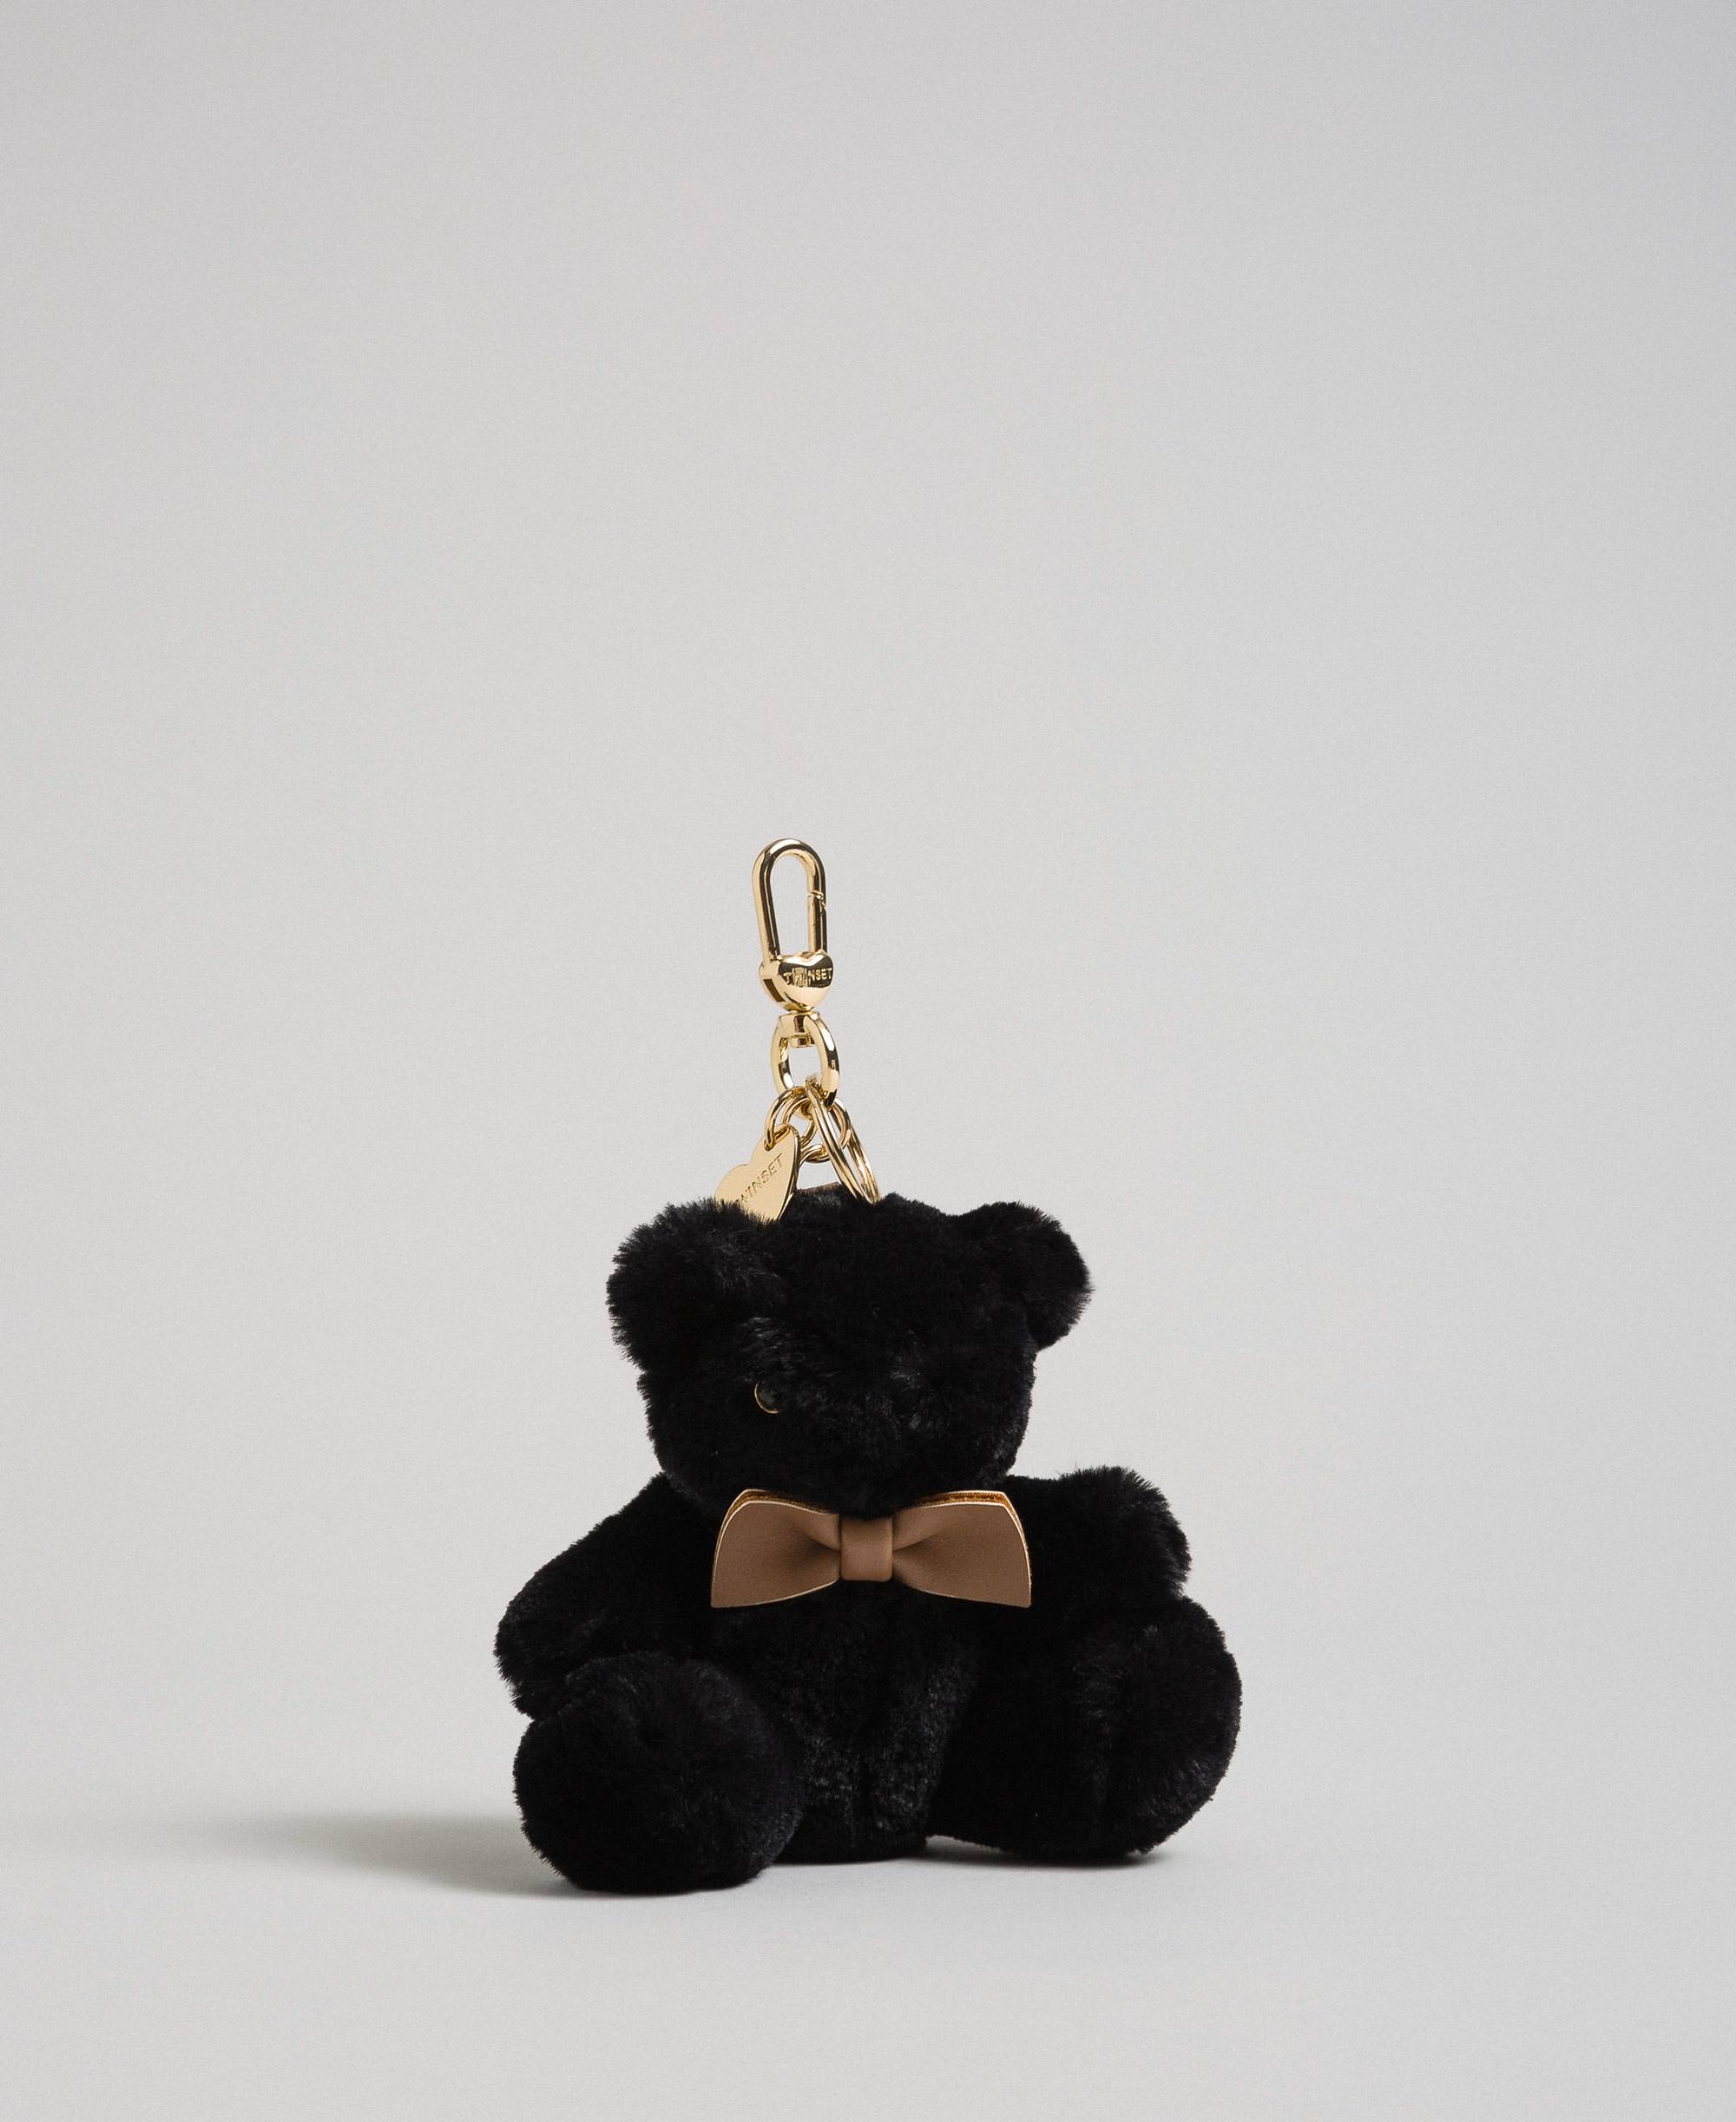 teddy bear with black bow tie